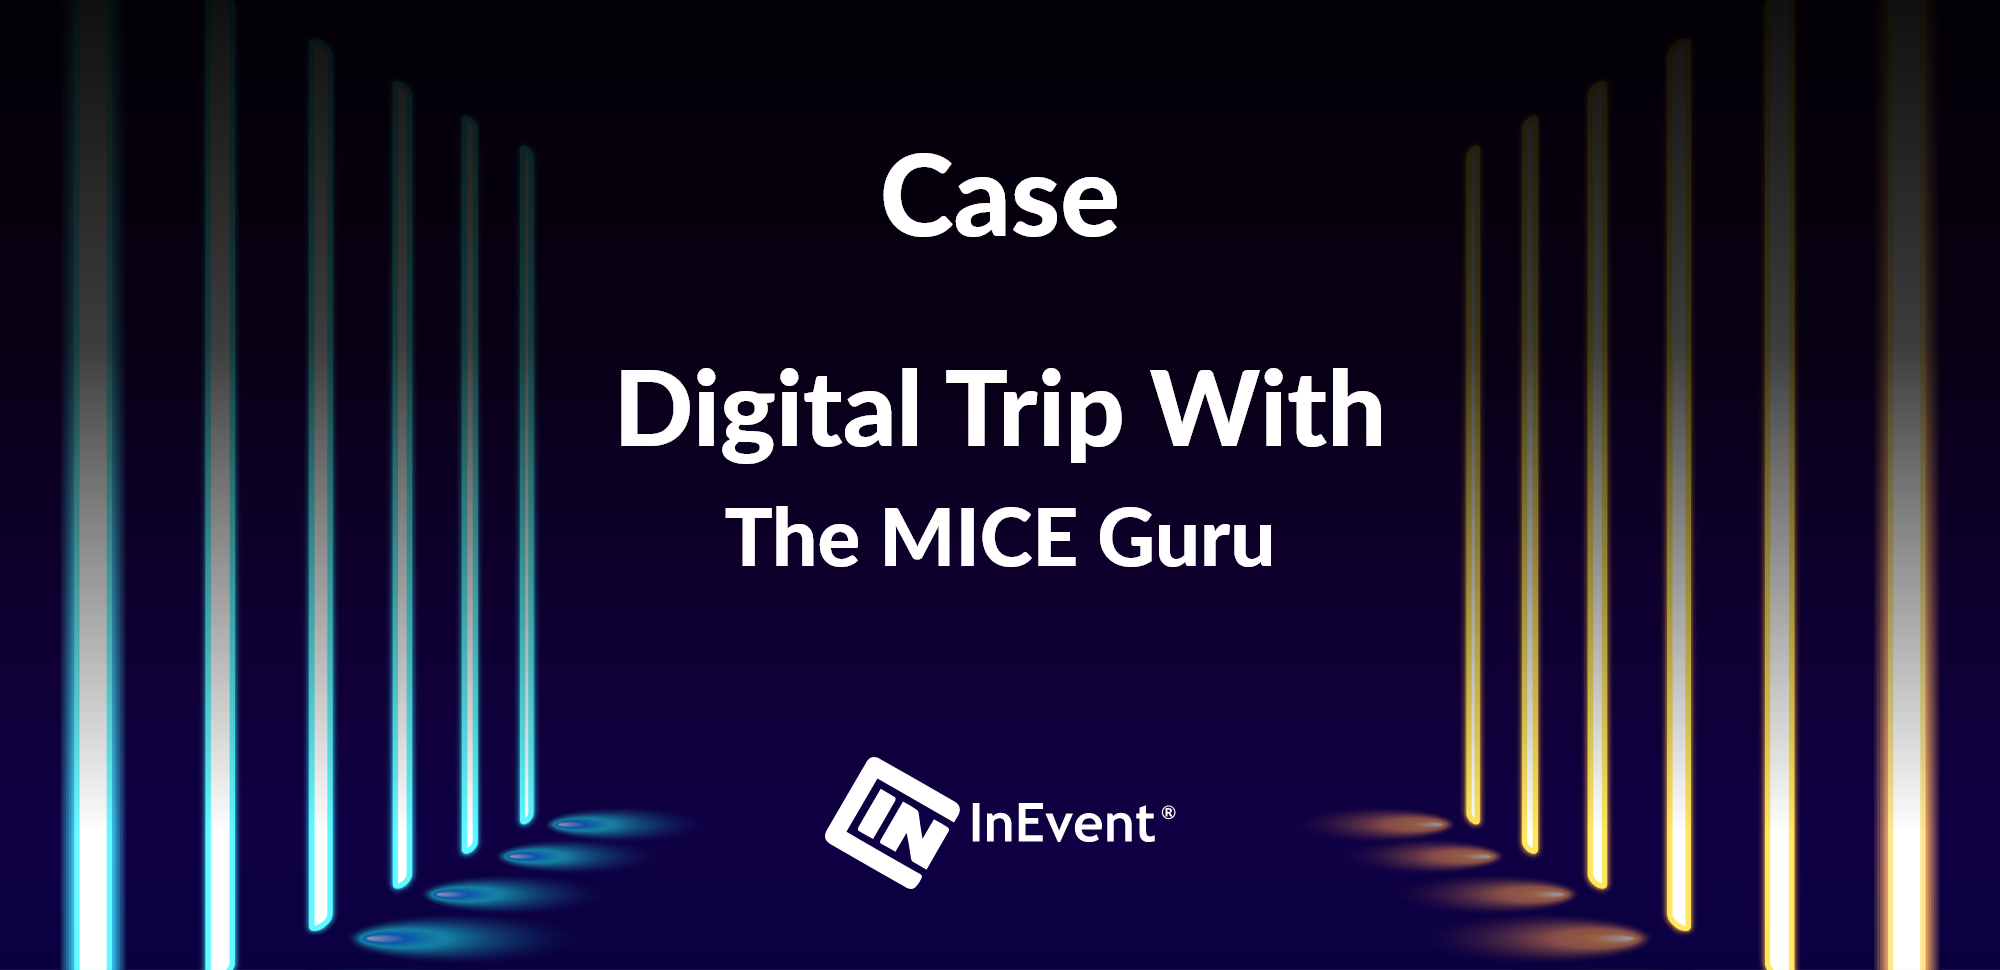 Digital Trip With The MICE Guru